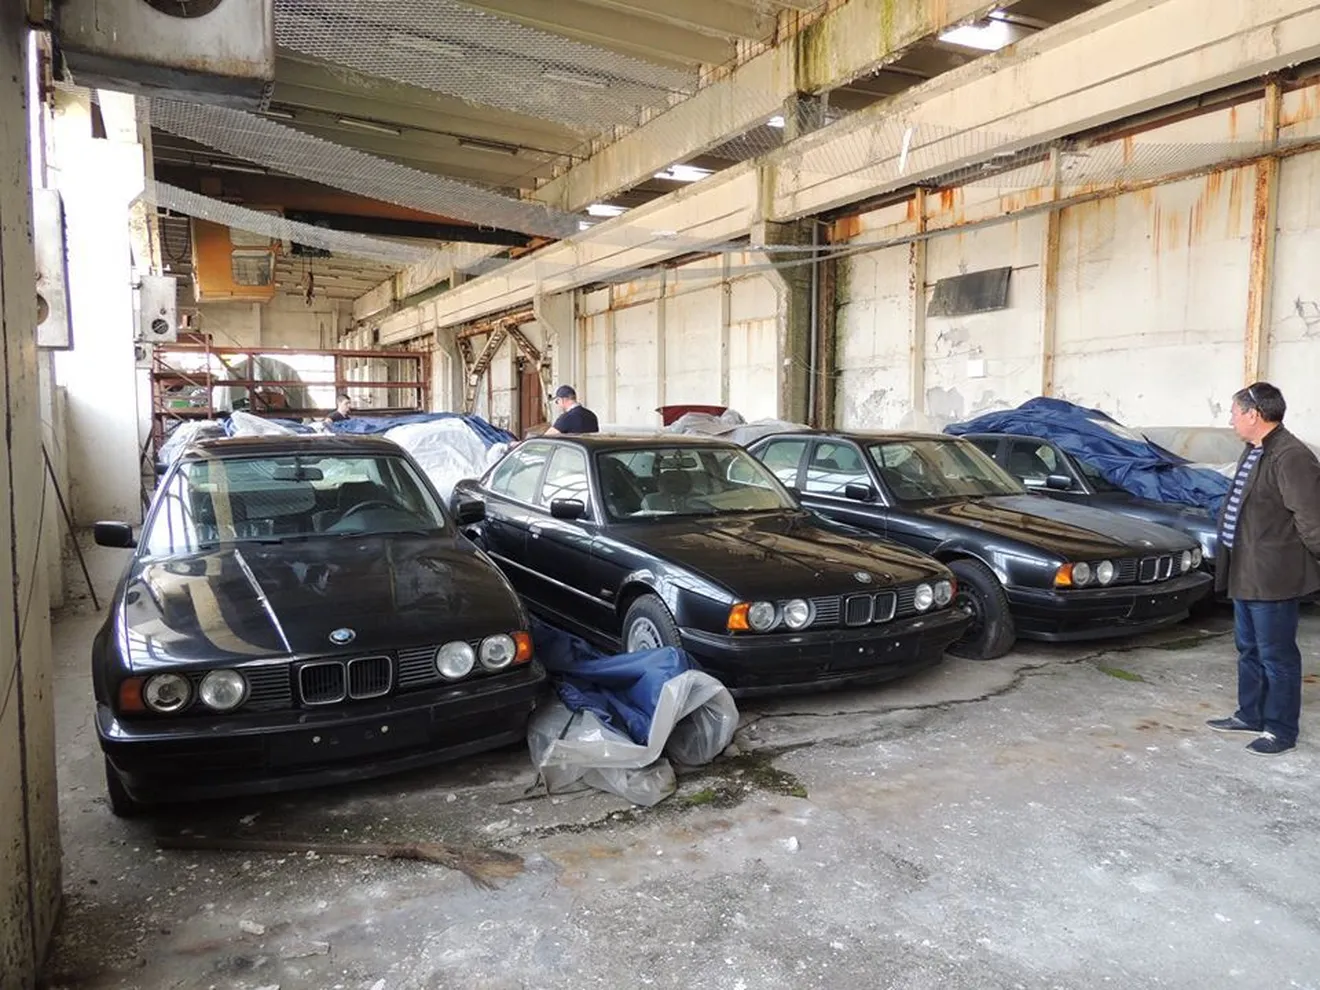 Los 11 BMW Serie 5 E34 abandonados en Bulgaria eran españoles